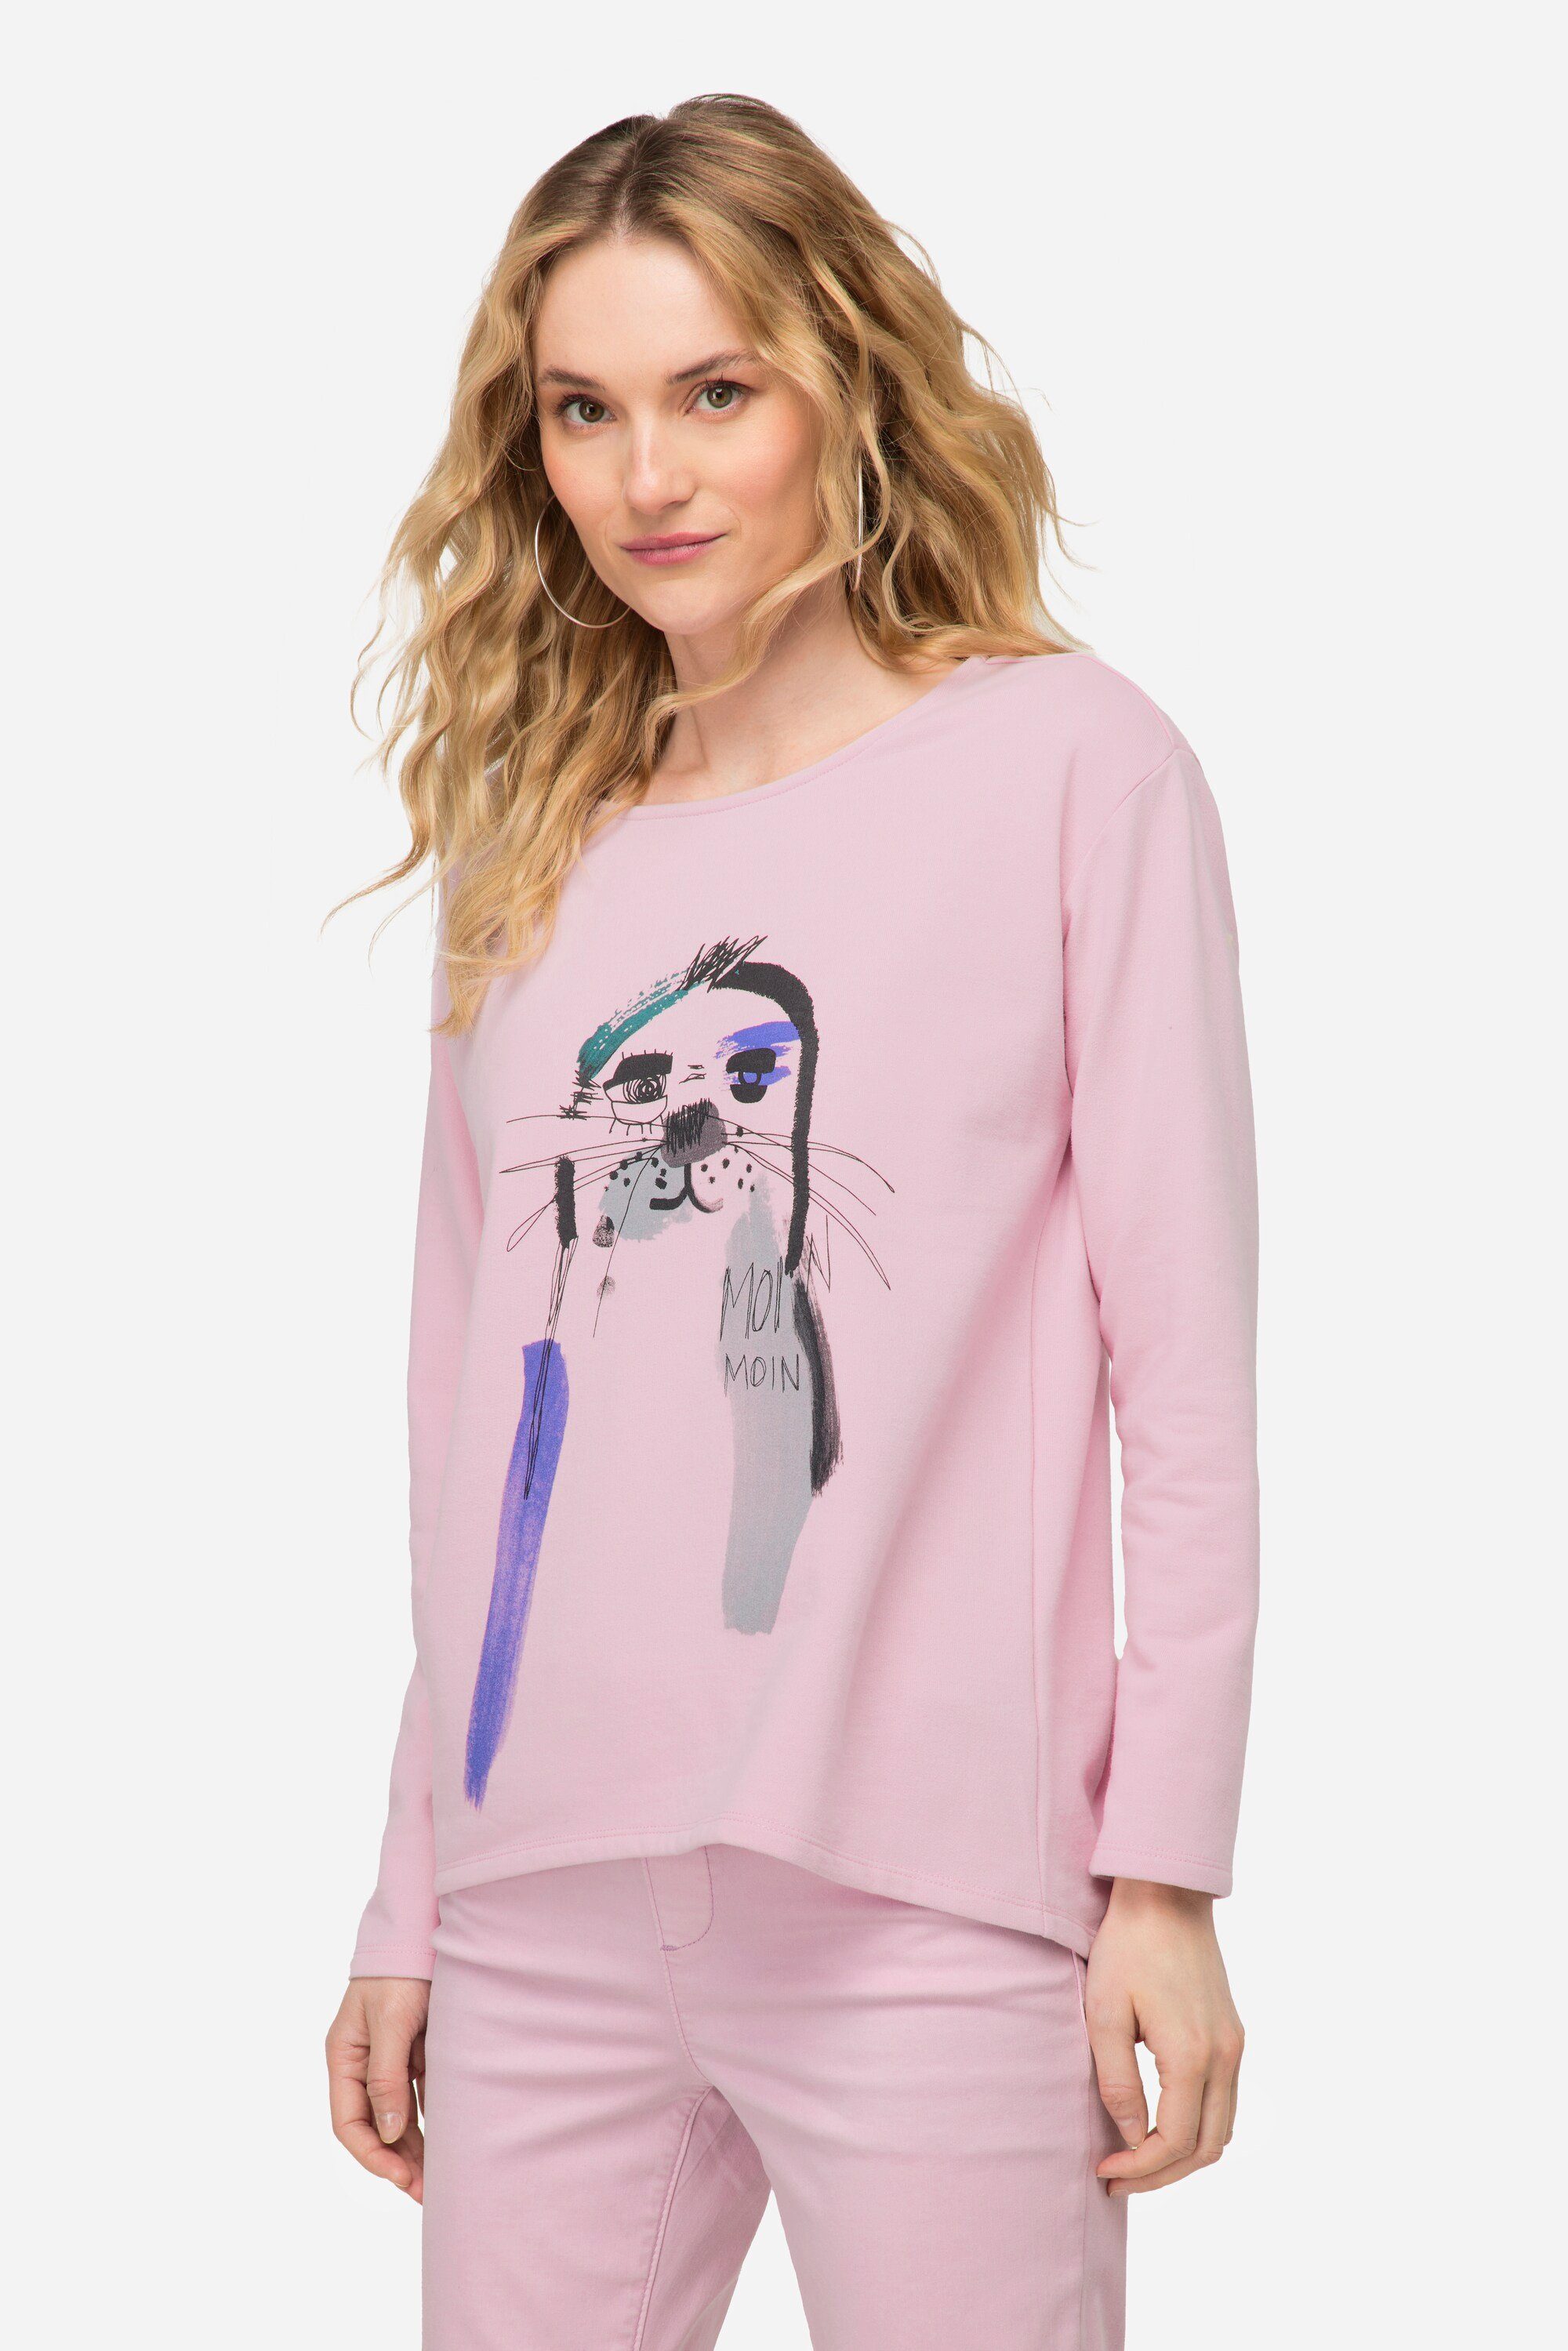 Langarm Sweatshirt Rundhals oversized Laurasøn Rosa Print Sweatshirt Robben